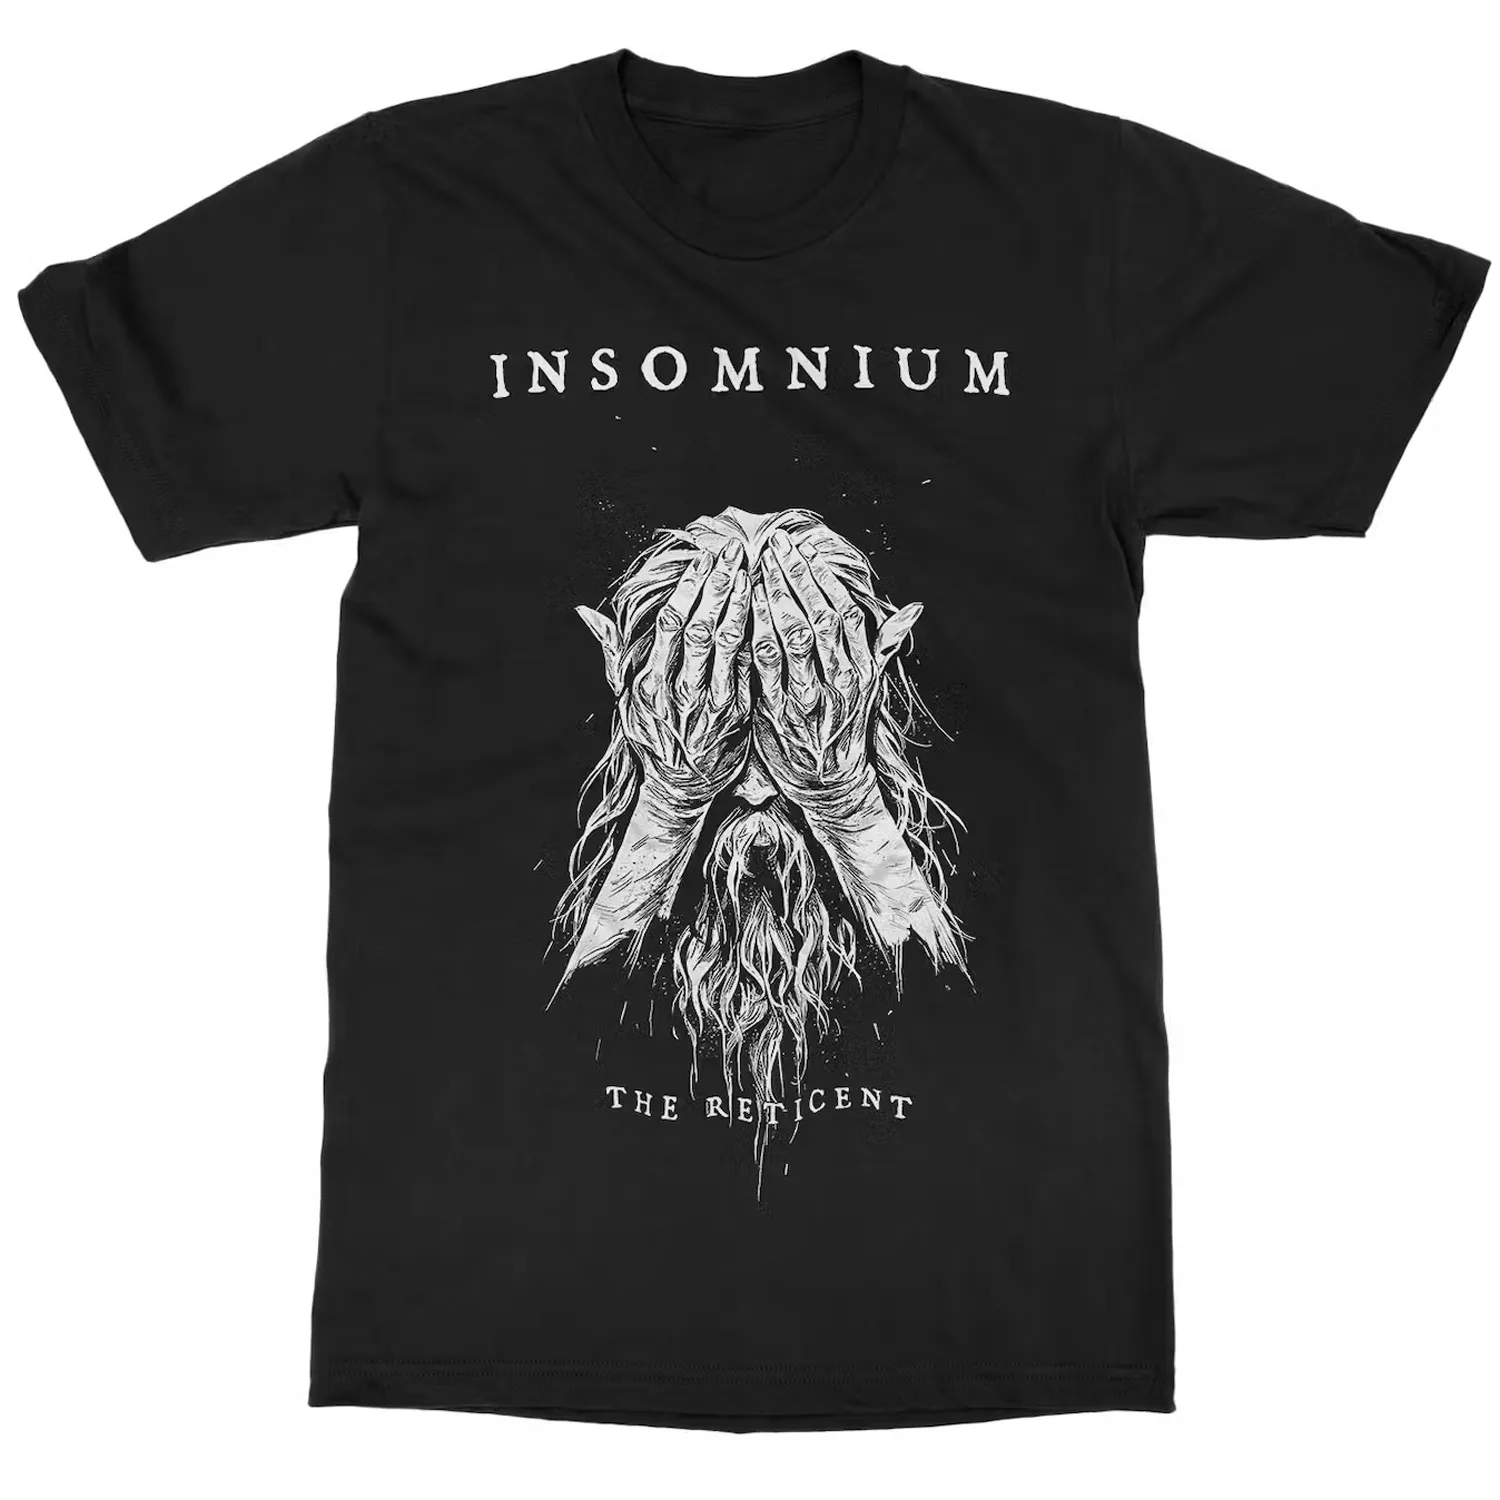 Insomnium band metal album черная футболка с коротким рукавом Всех размеров S-5Xl 1F1273